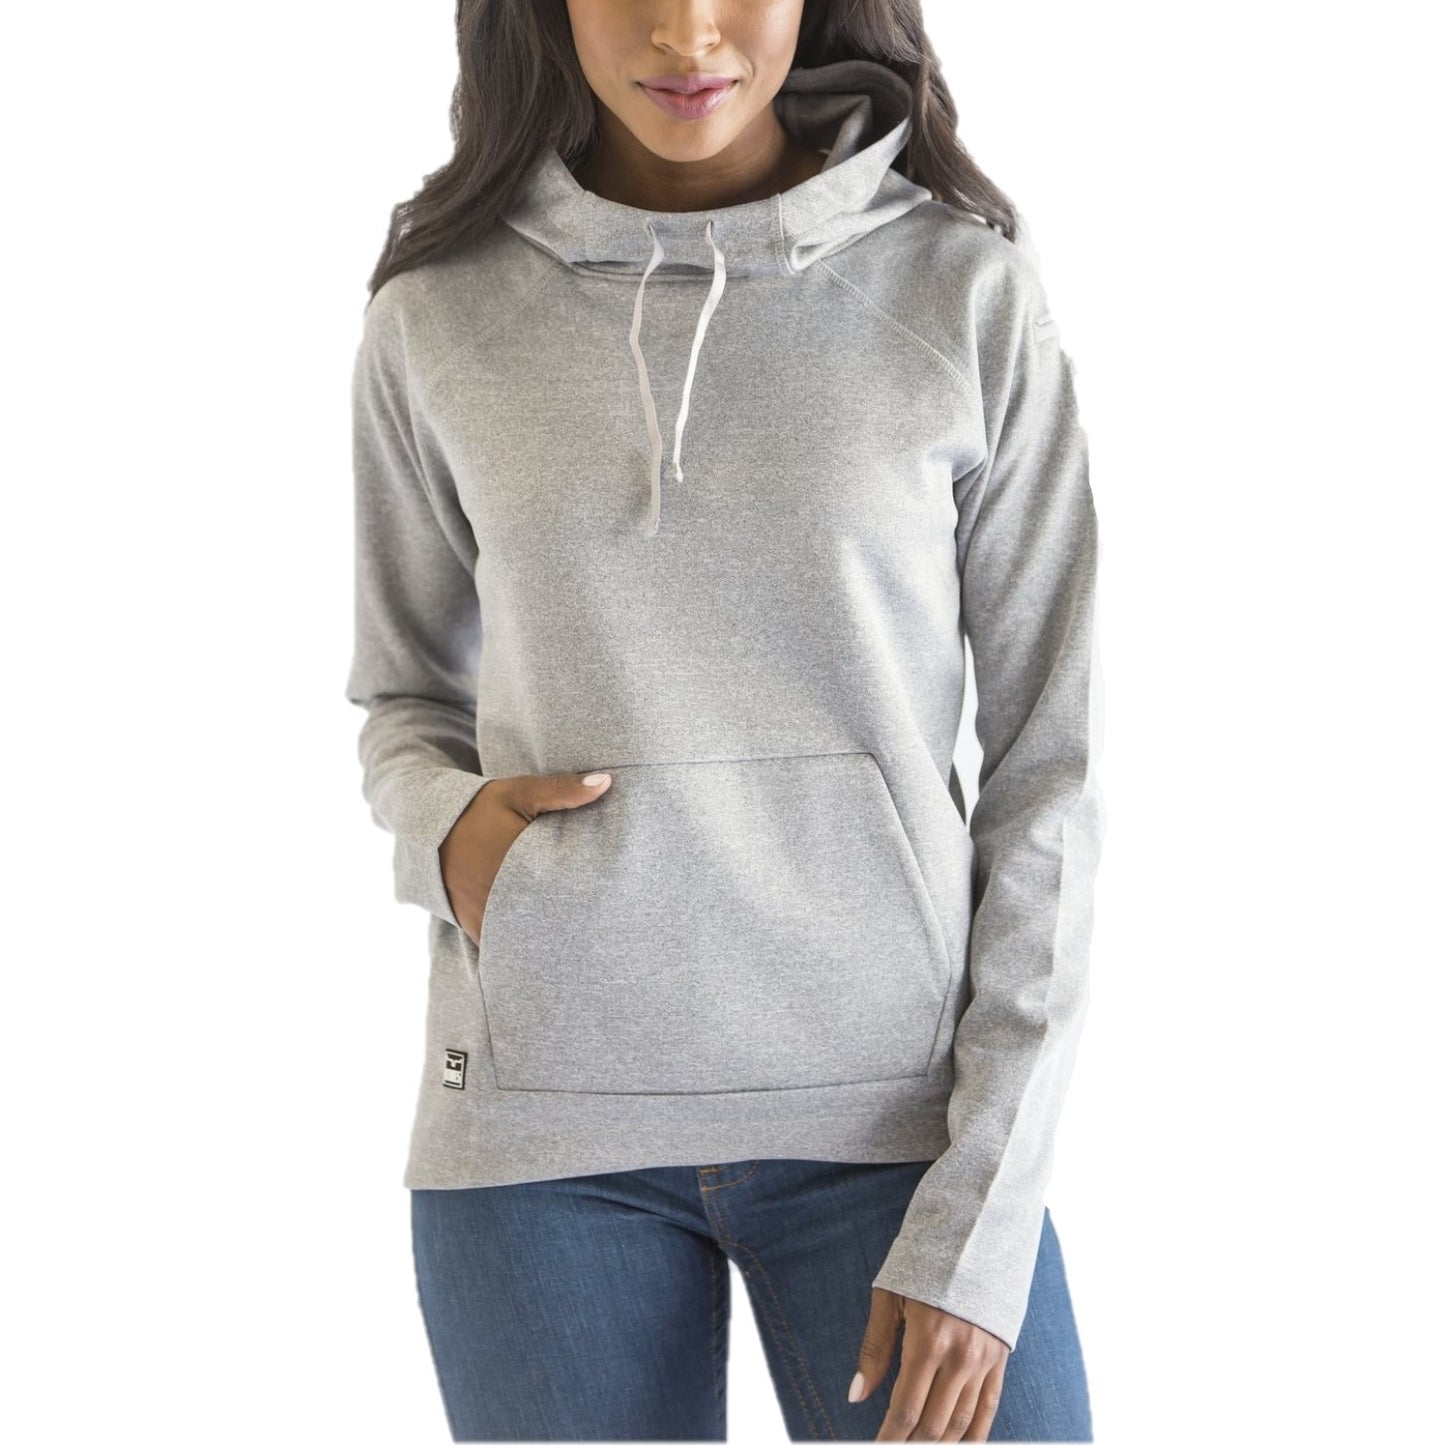 Kimes Ranch Ladies Sedona Grey Hooded Sweatshirt SED-GRY